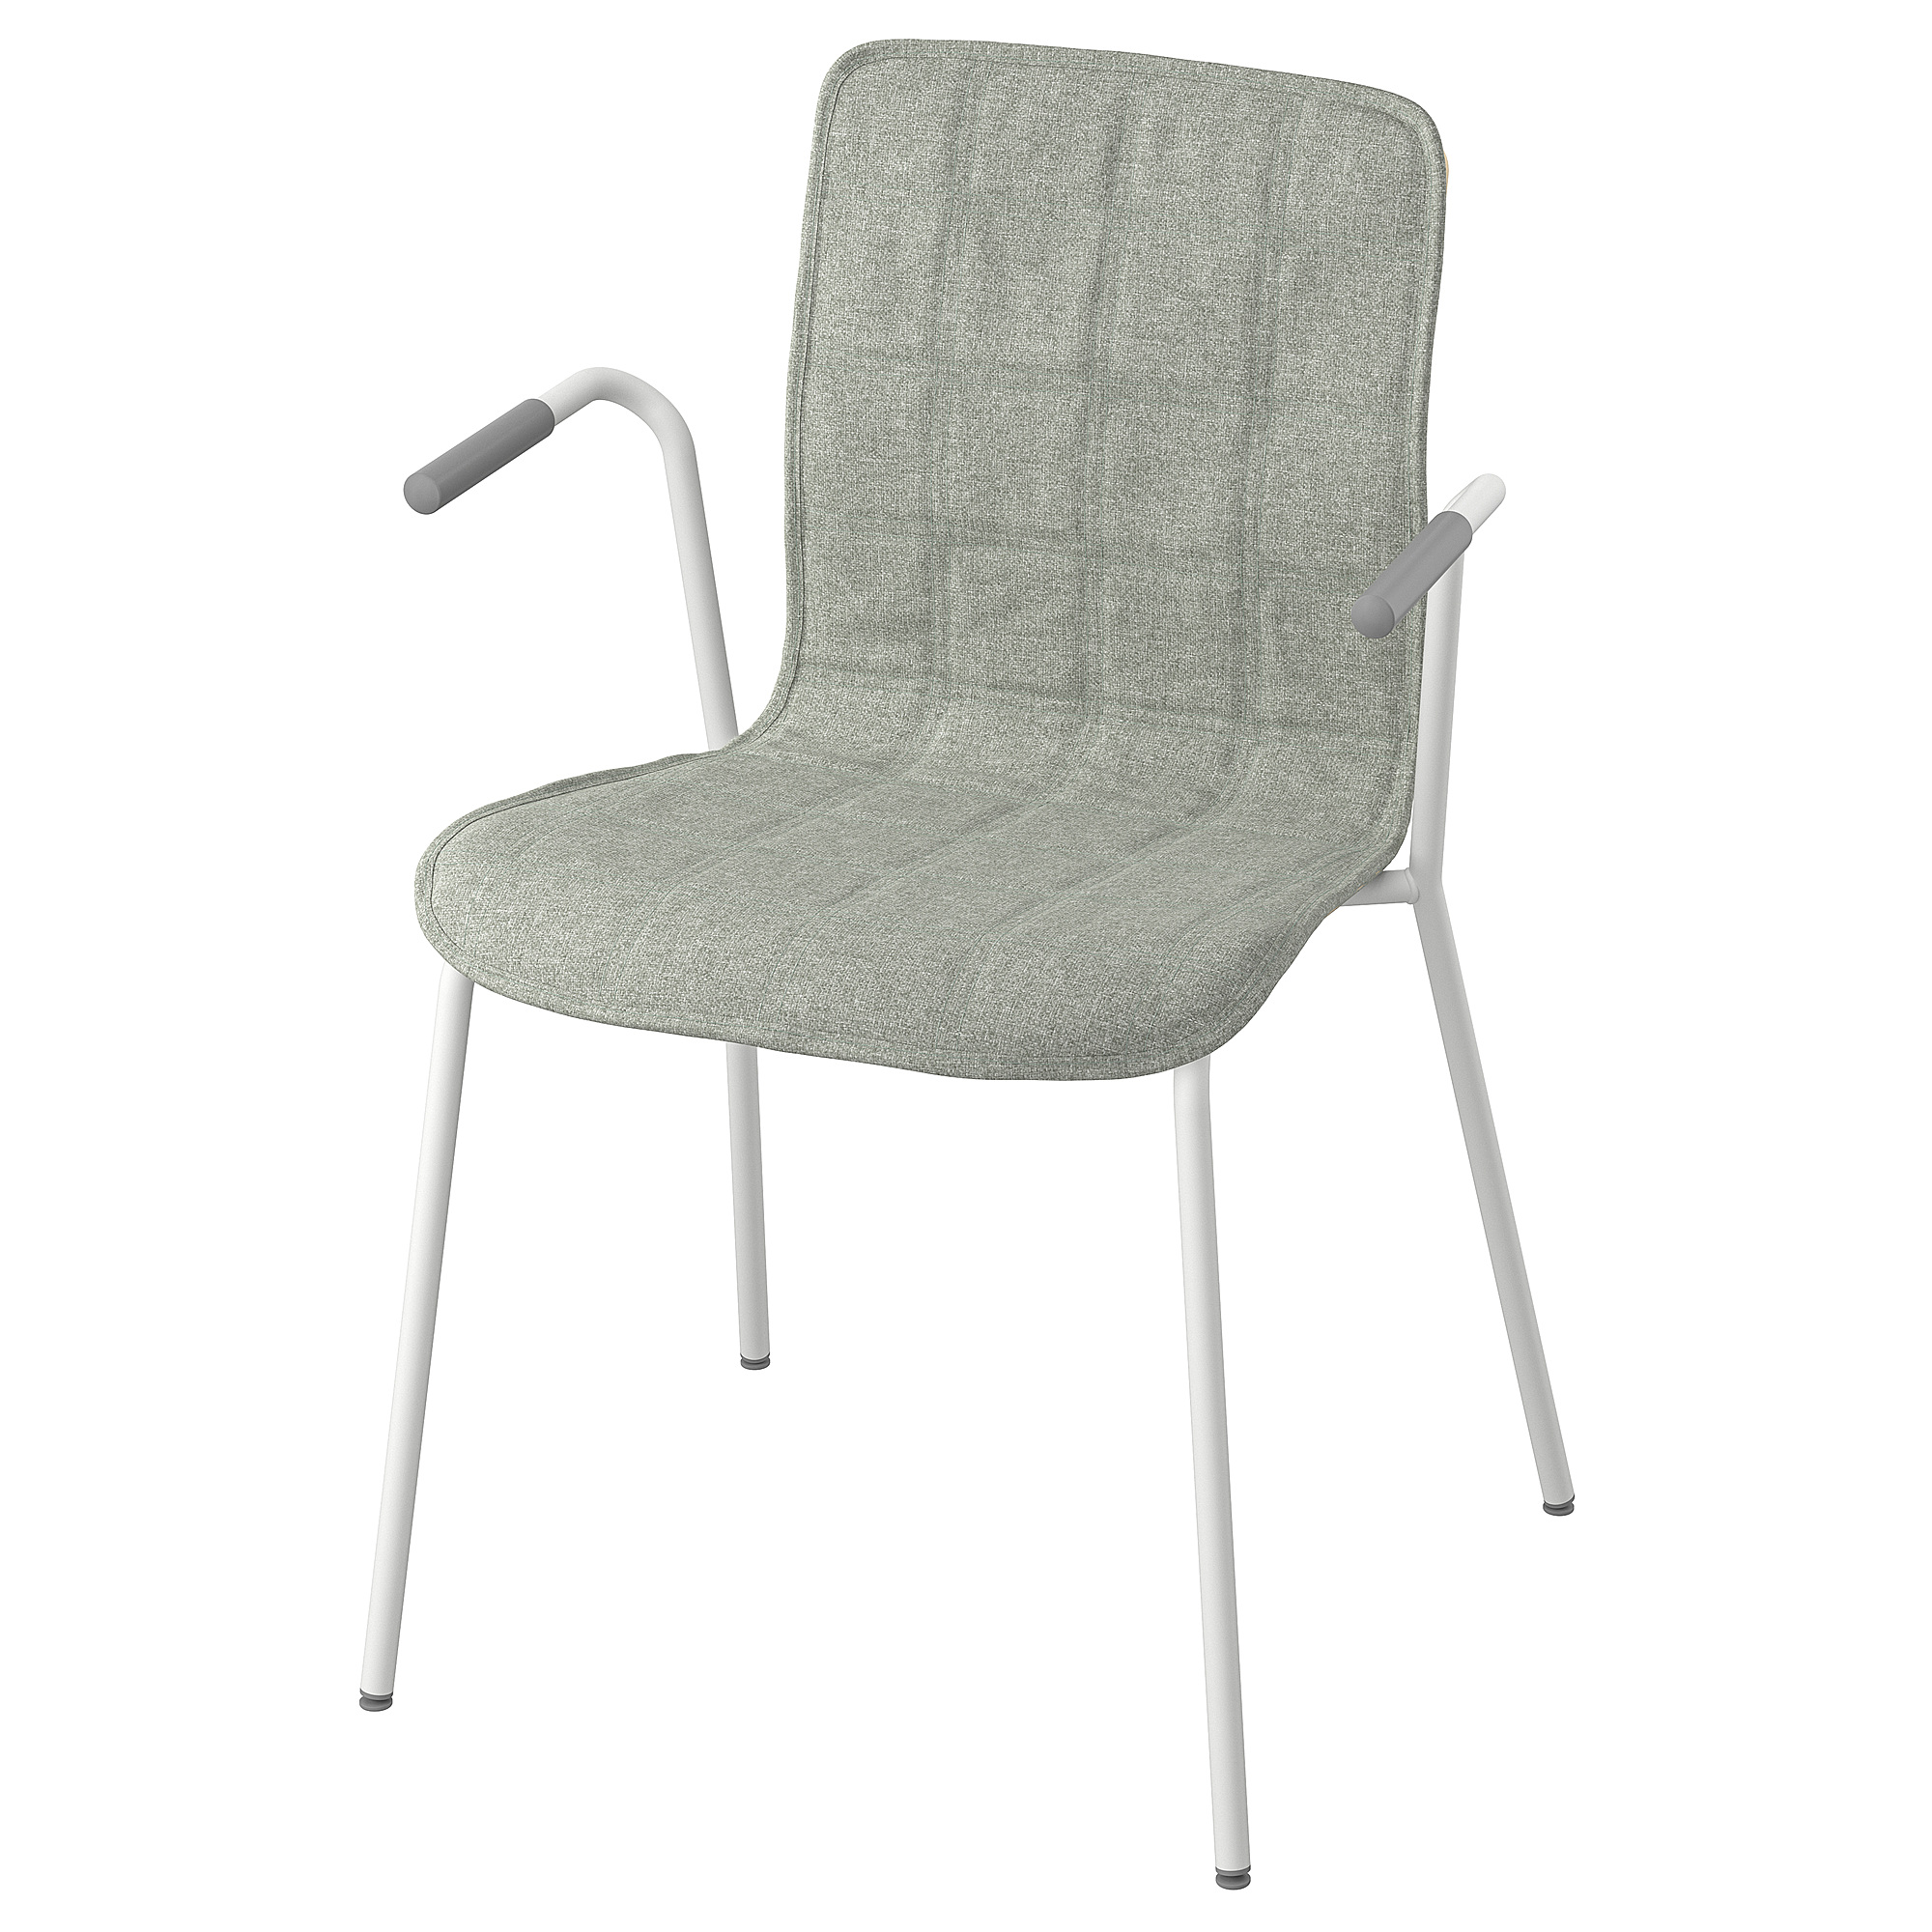 LÄKTARE chair cover